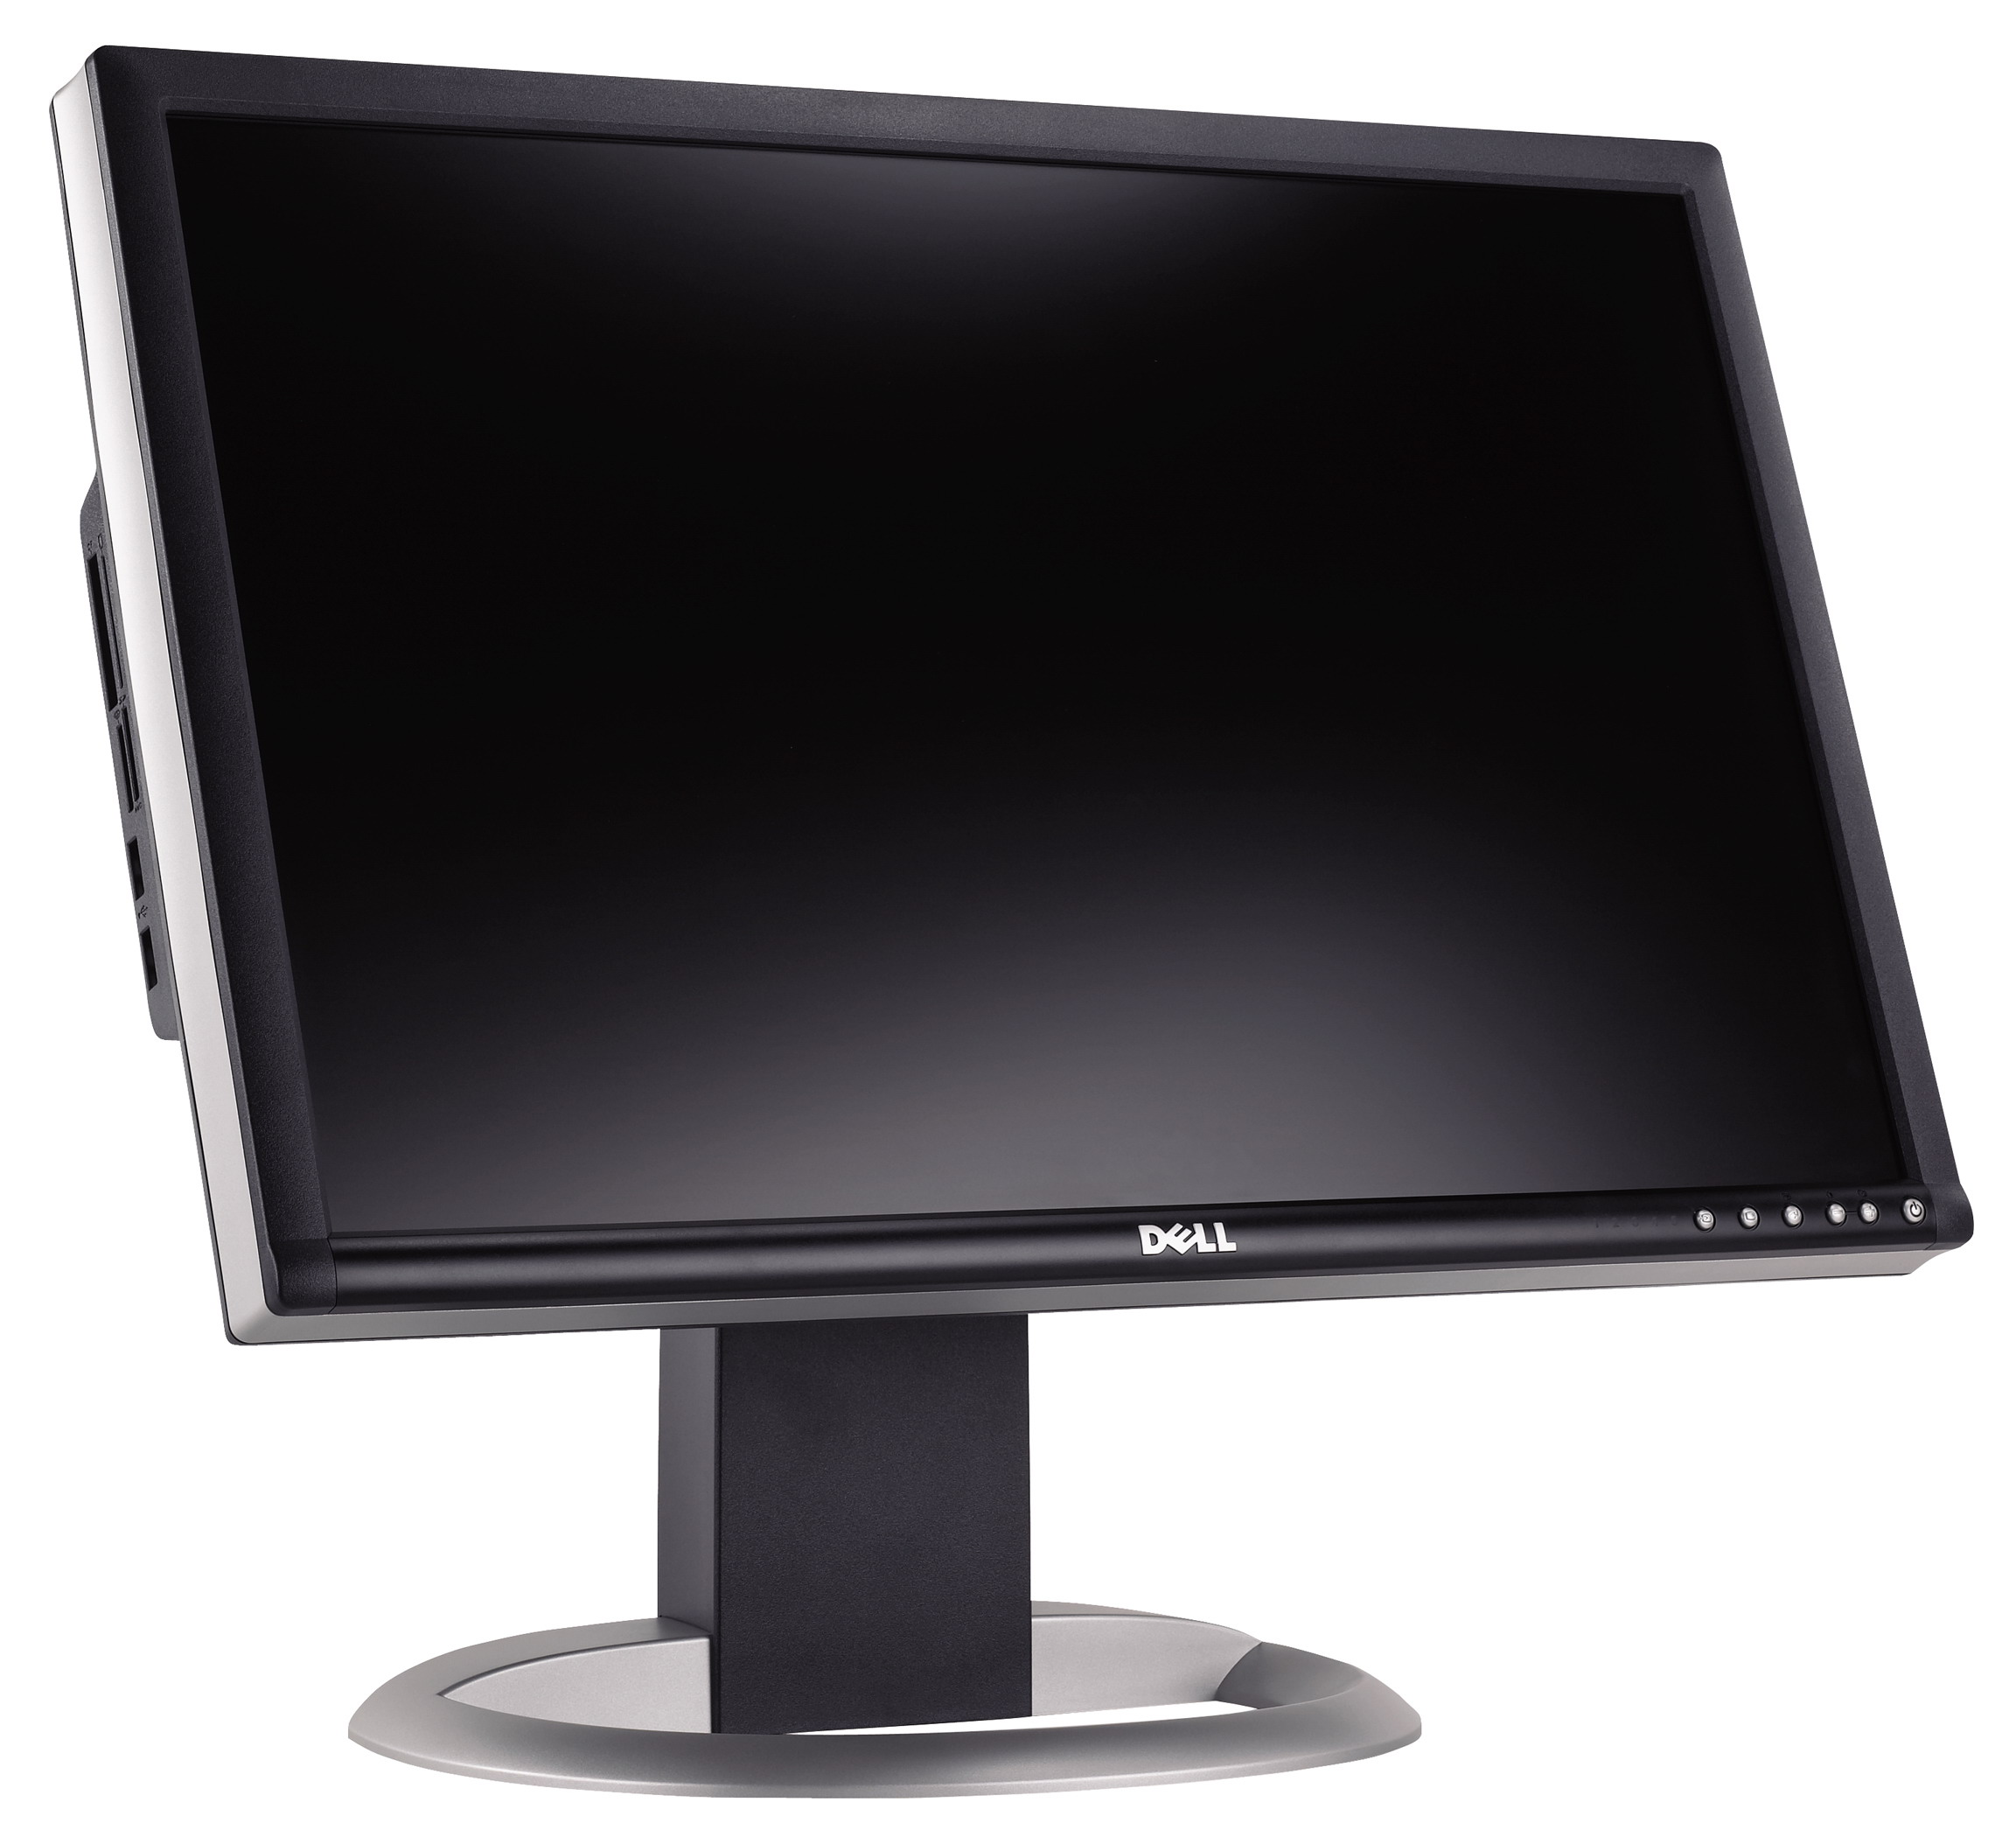 Dell™ 2405FPW 24'' UltraSharp Wide Screen LCD Monitor.. 후후후...